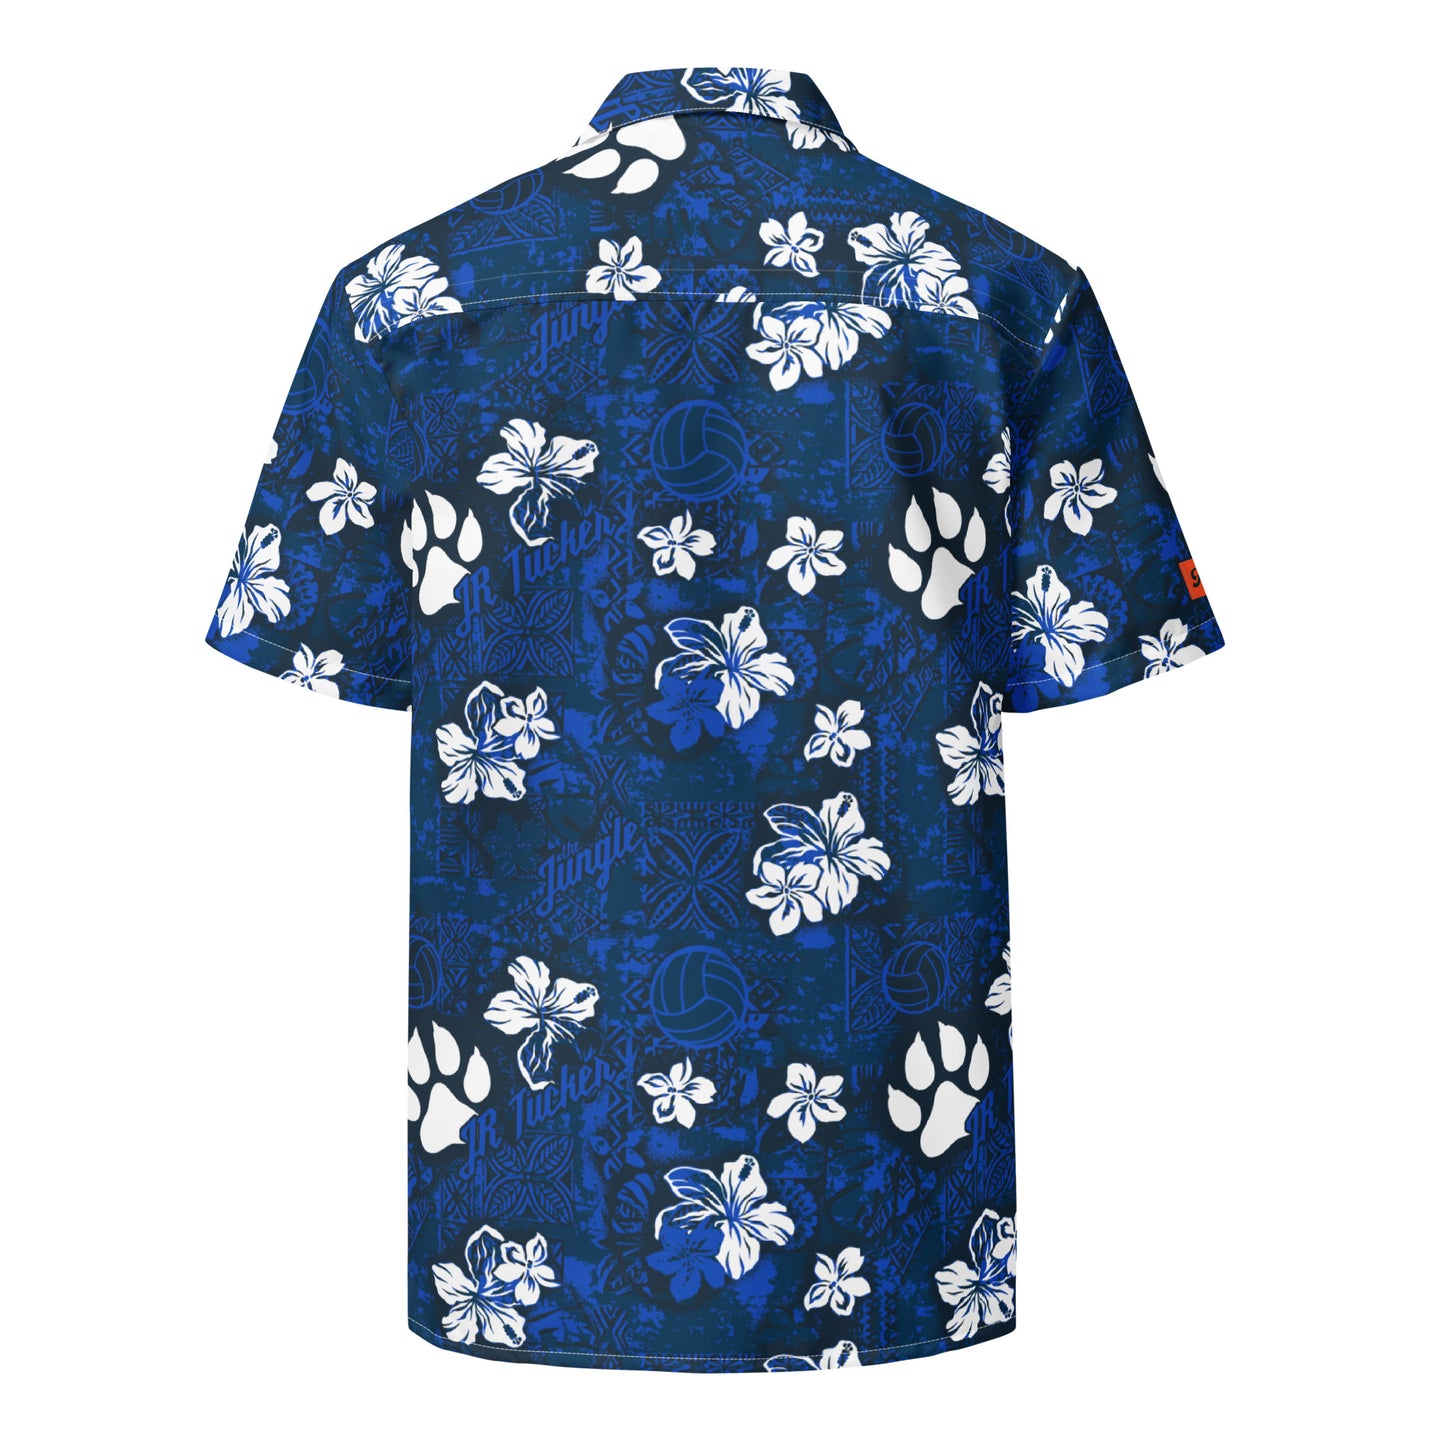 JRT Tapa Aloha Shirt